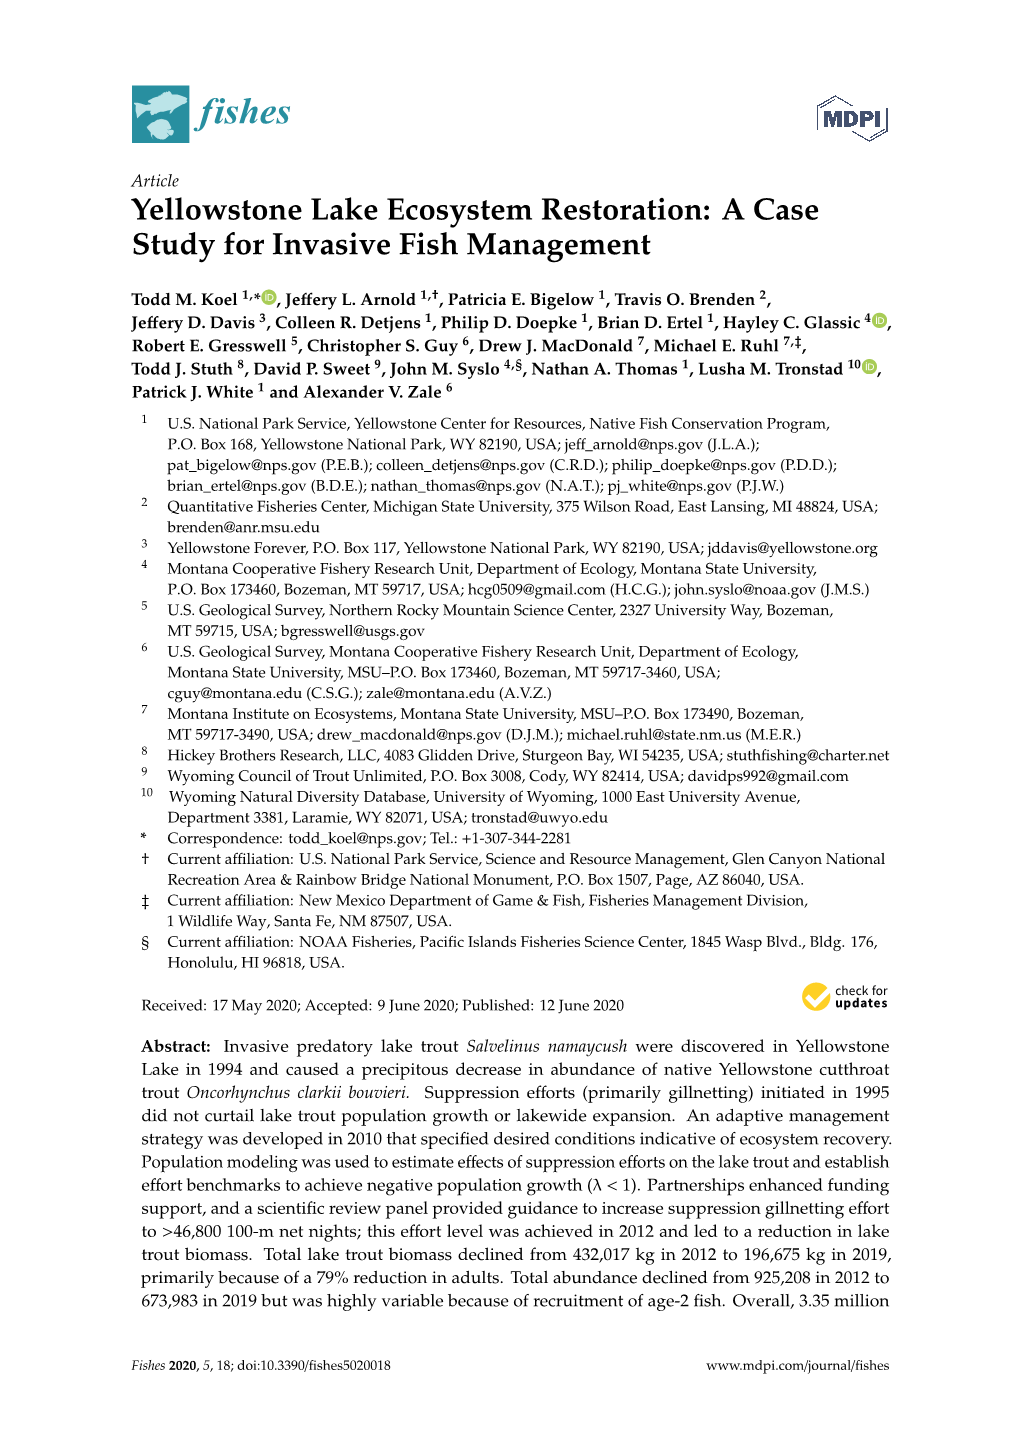 Yellowstone Lake Ecosystem Restoration: a Case Study for Invasive Fish Management